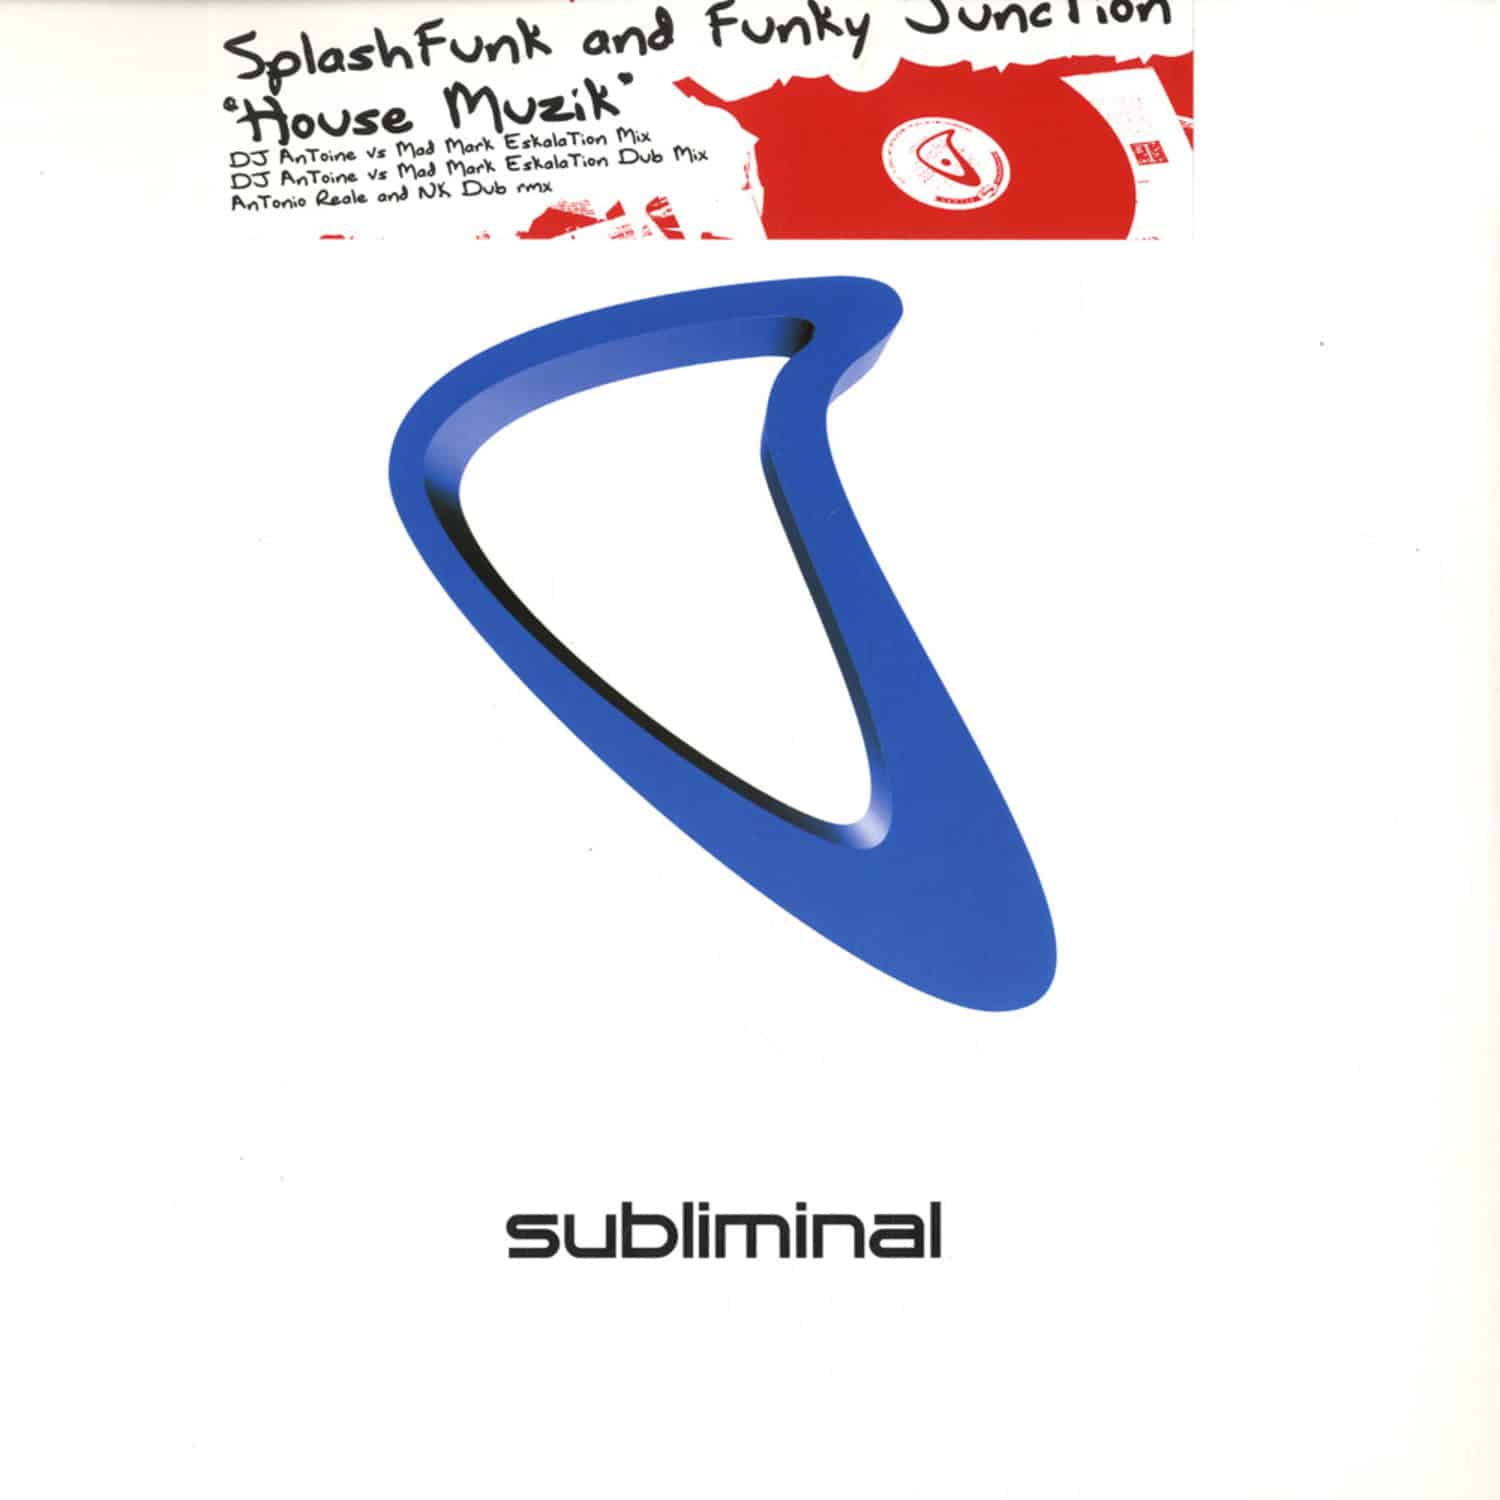 SplashFunk vs Funky Junction - HOUSEMUZIK